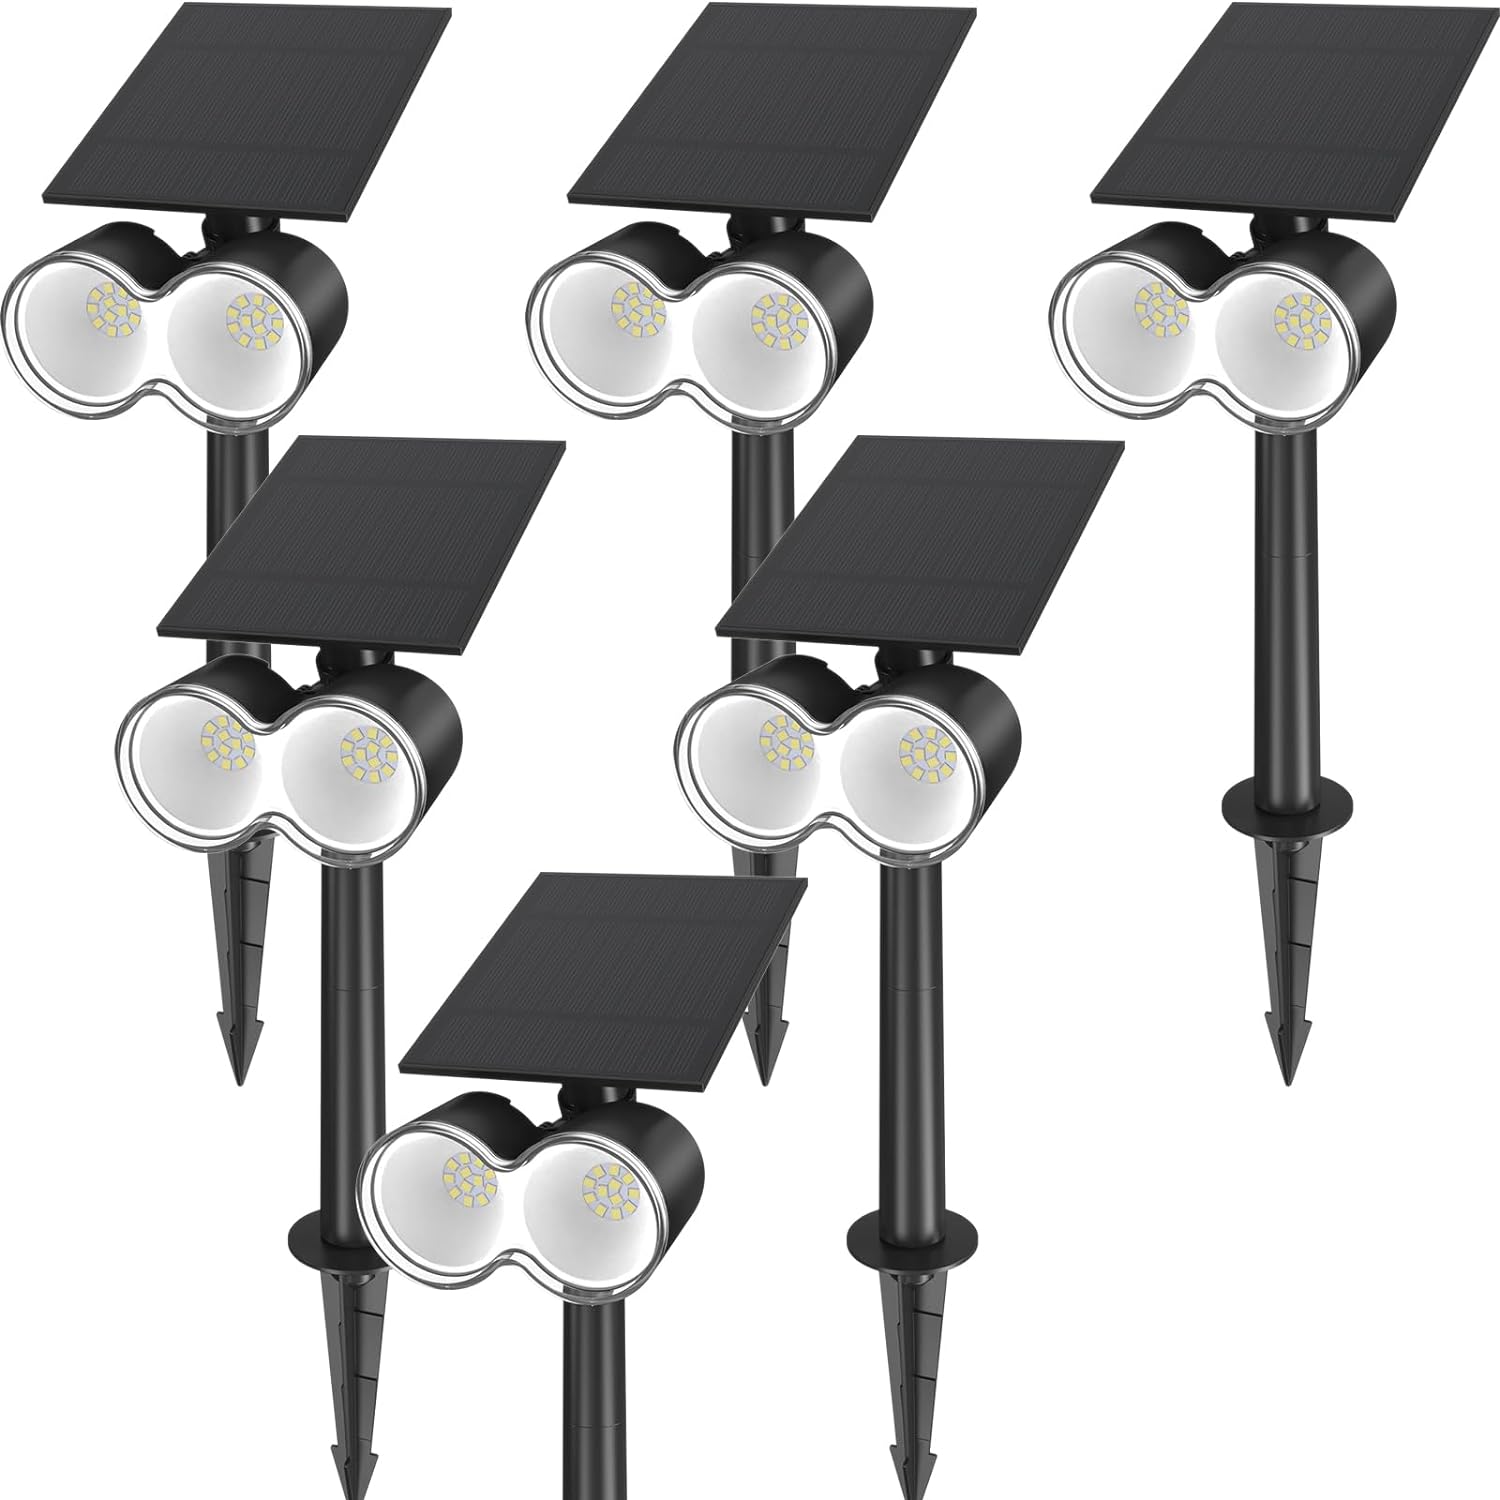 Solar Spot Lights,6500K,360°Horizontal Adjustable,3 Modes,Auto ON/OFF,4 Packs,WX 6500K 4